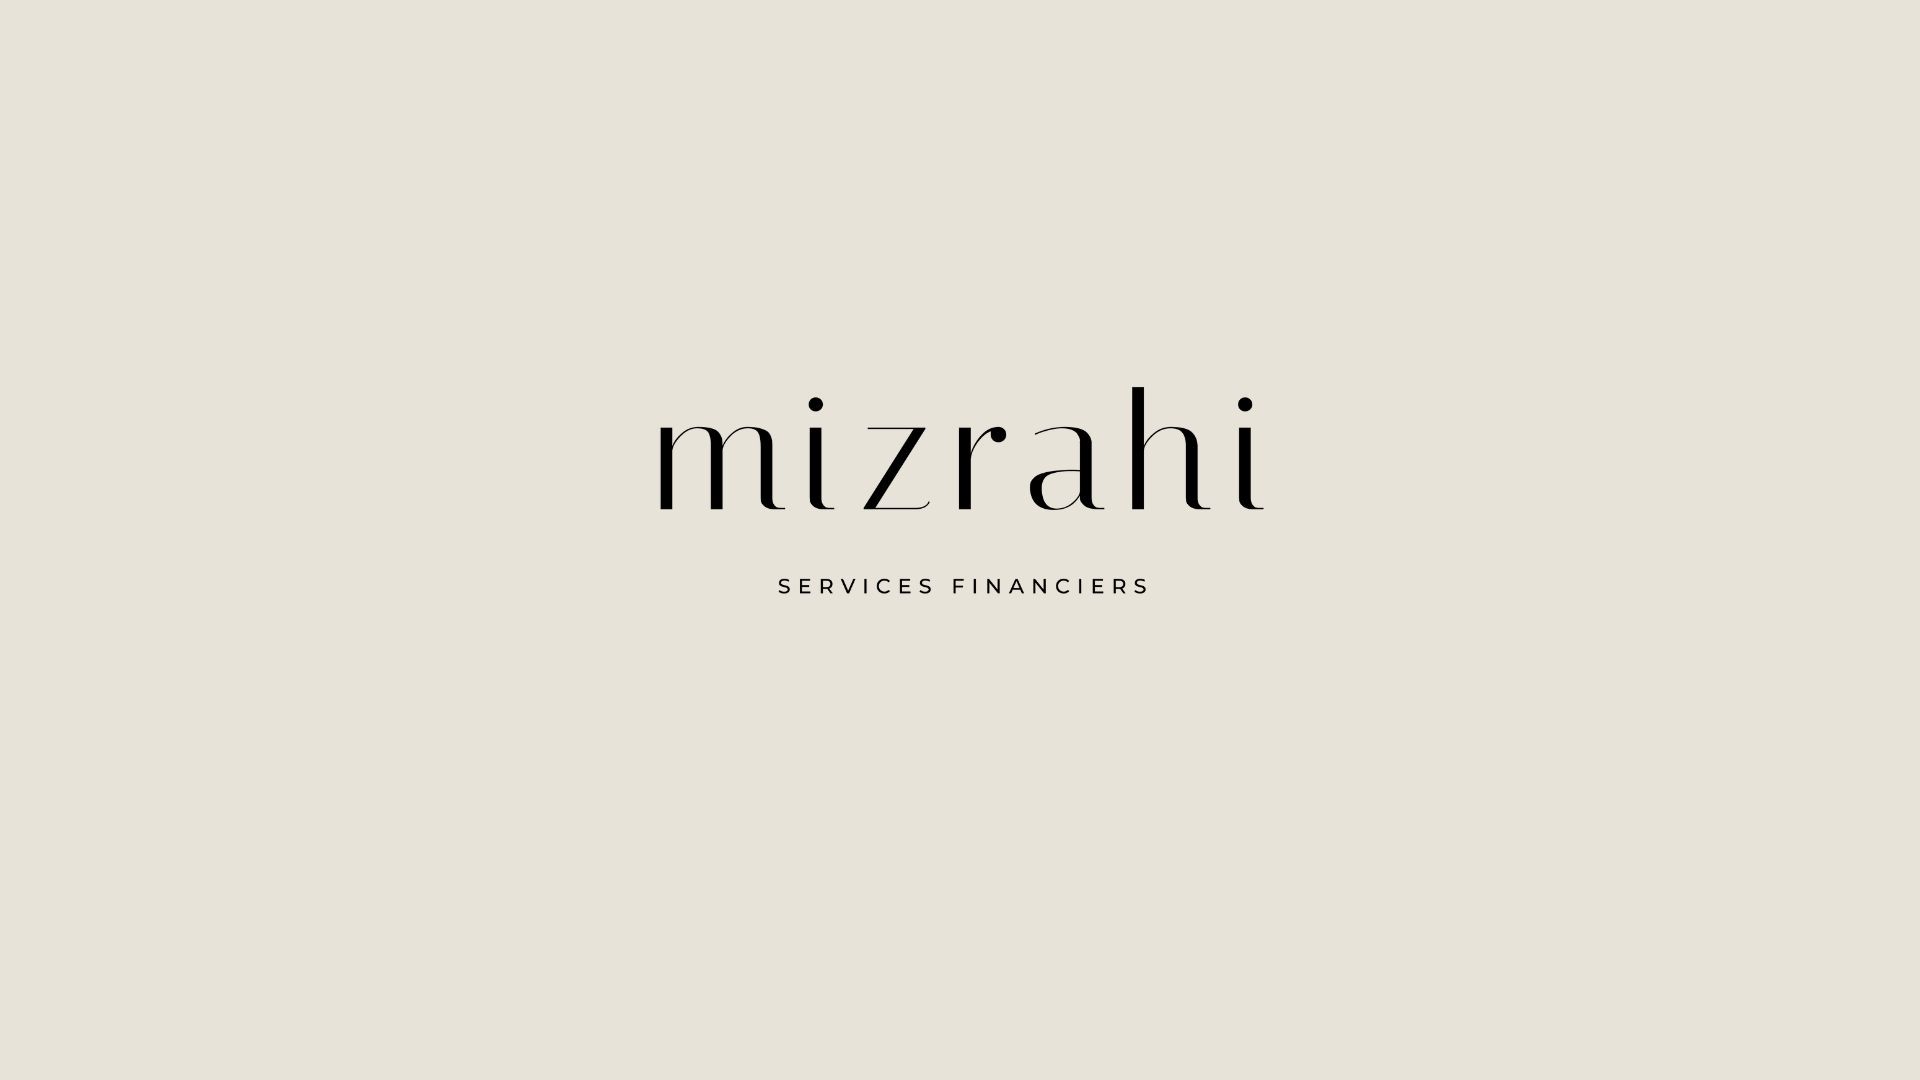 Mizrahi Financial Services